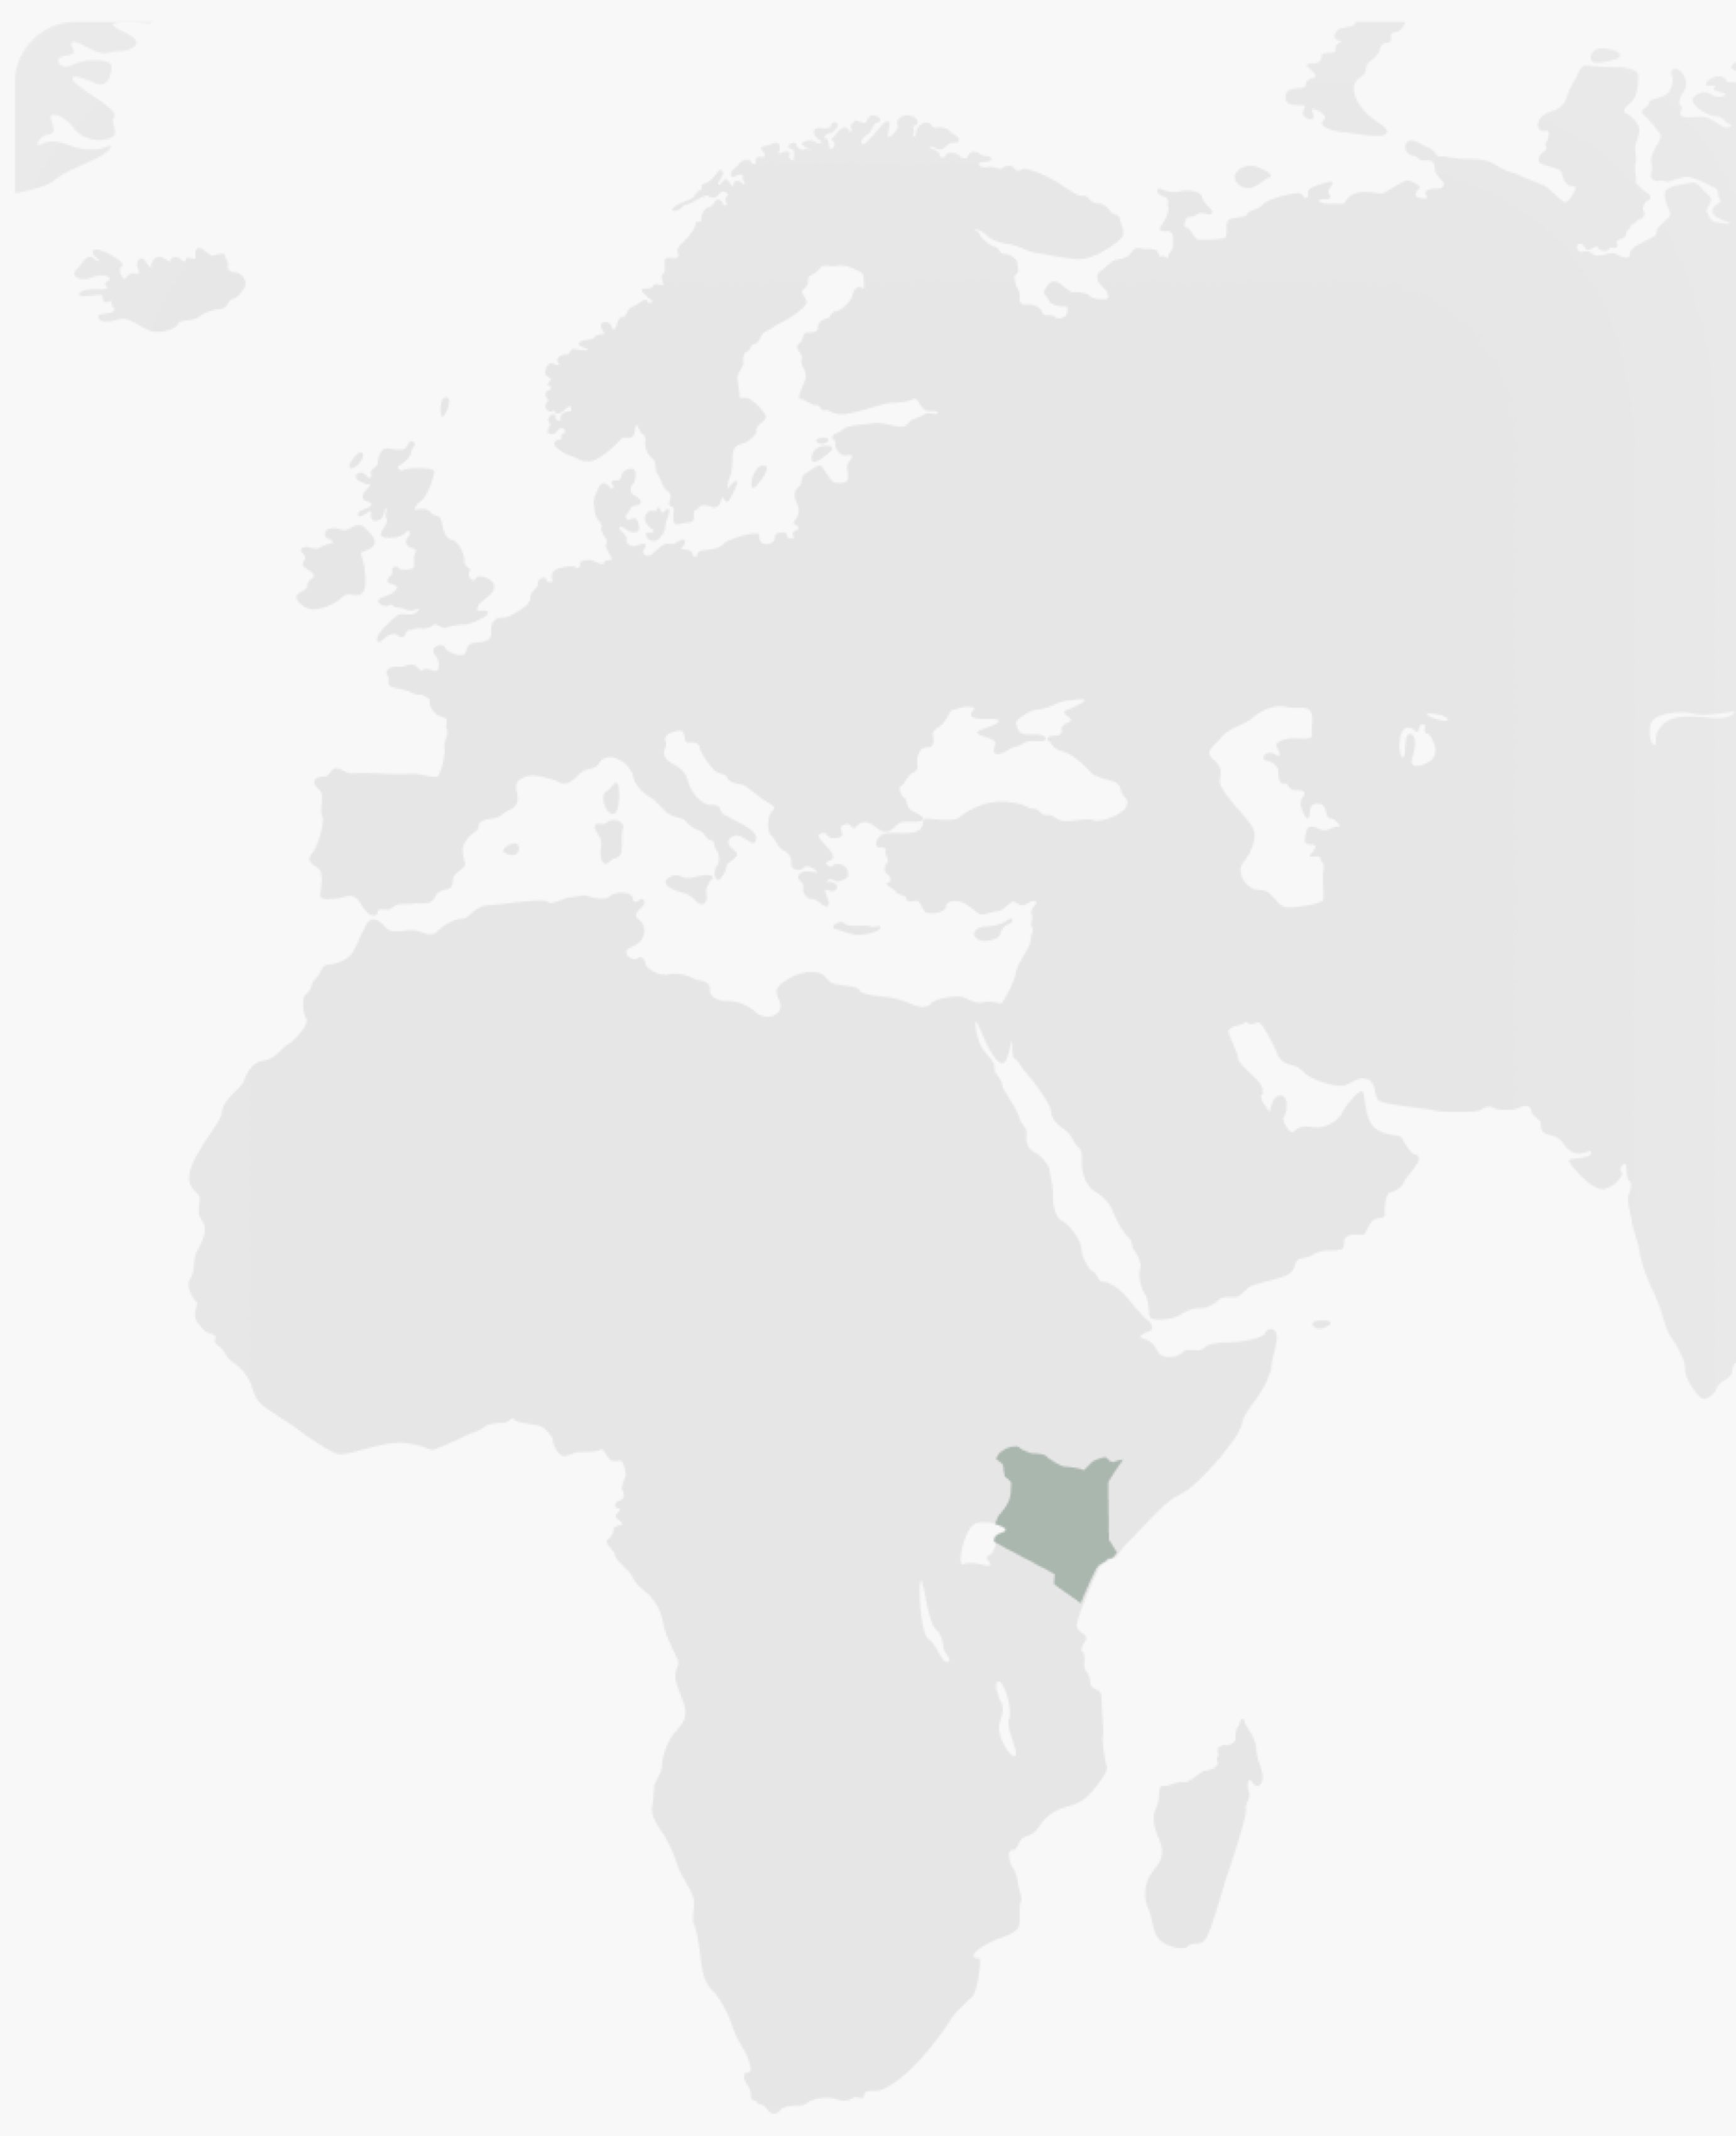 Marula Map